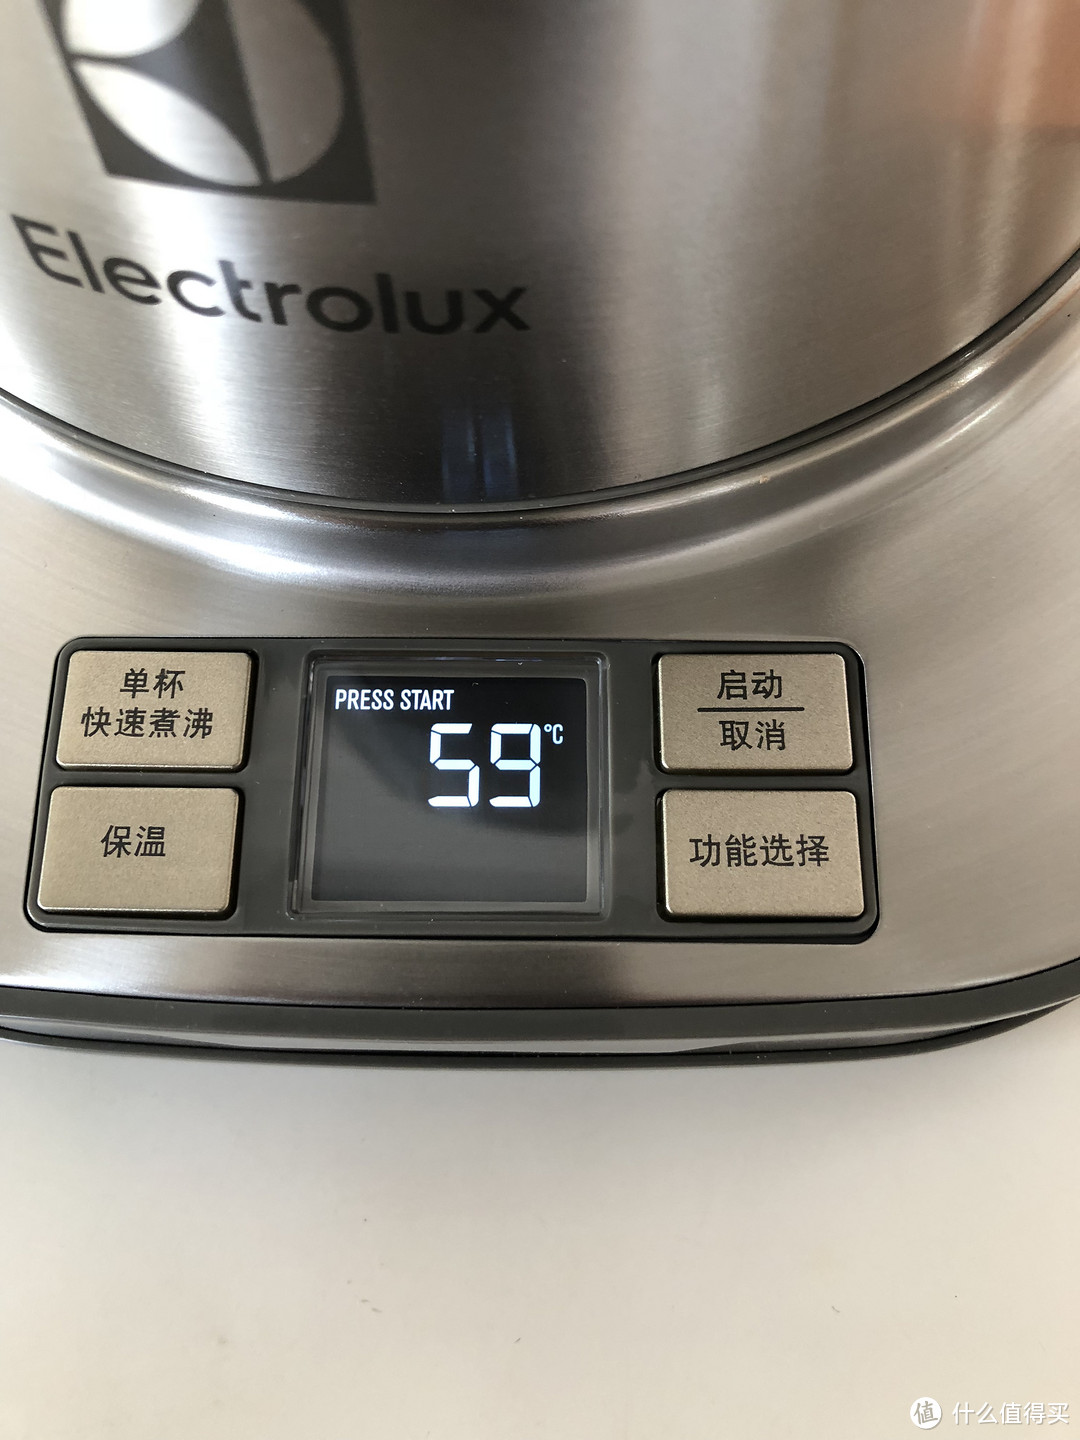 Electrolux 伊莱克斯 EEK7804S 电热水壶 使用评测